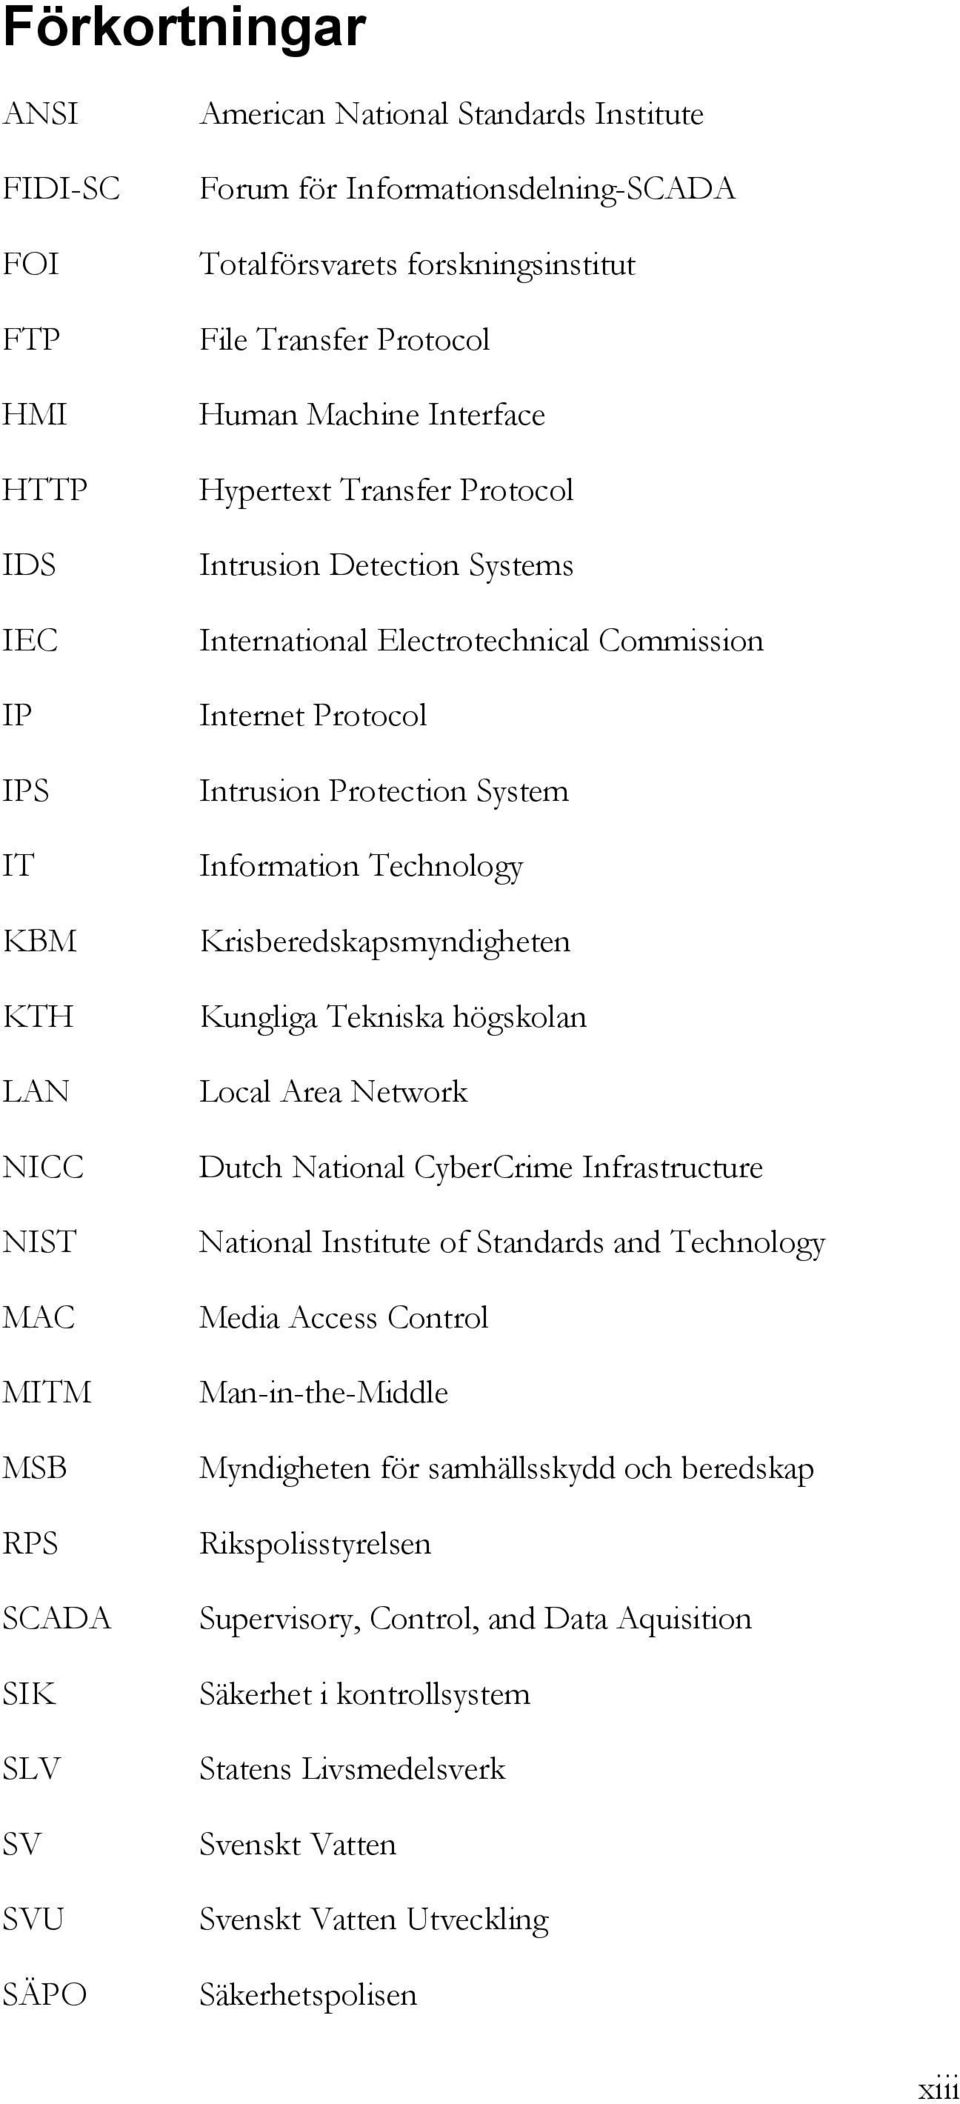 Commission Internet Protocol Intrusion Protection System Information Technology Krisberedskapsmyndigheten Kungliga Tekniska högskolan Local Area Network Dutch National CyberCrime Infrastructure